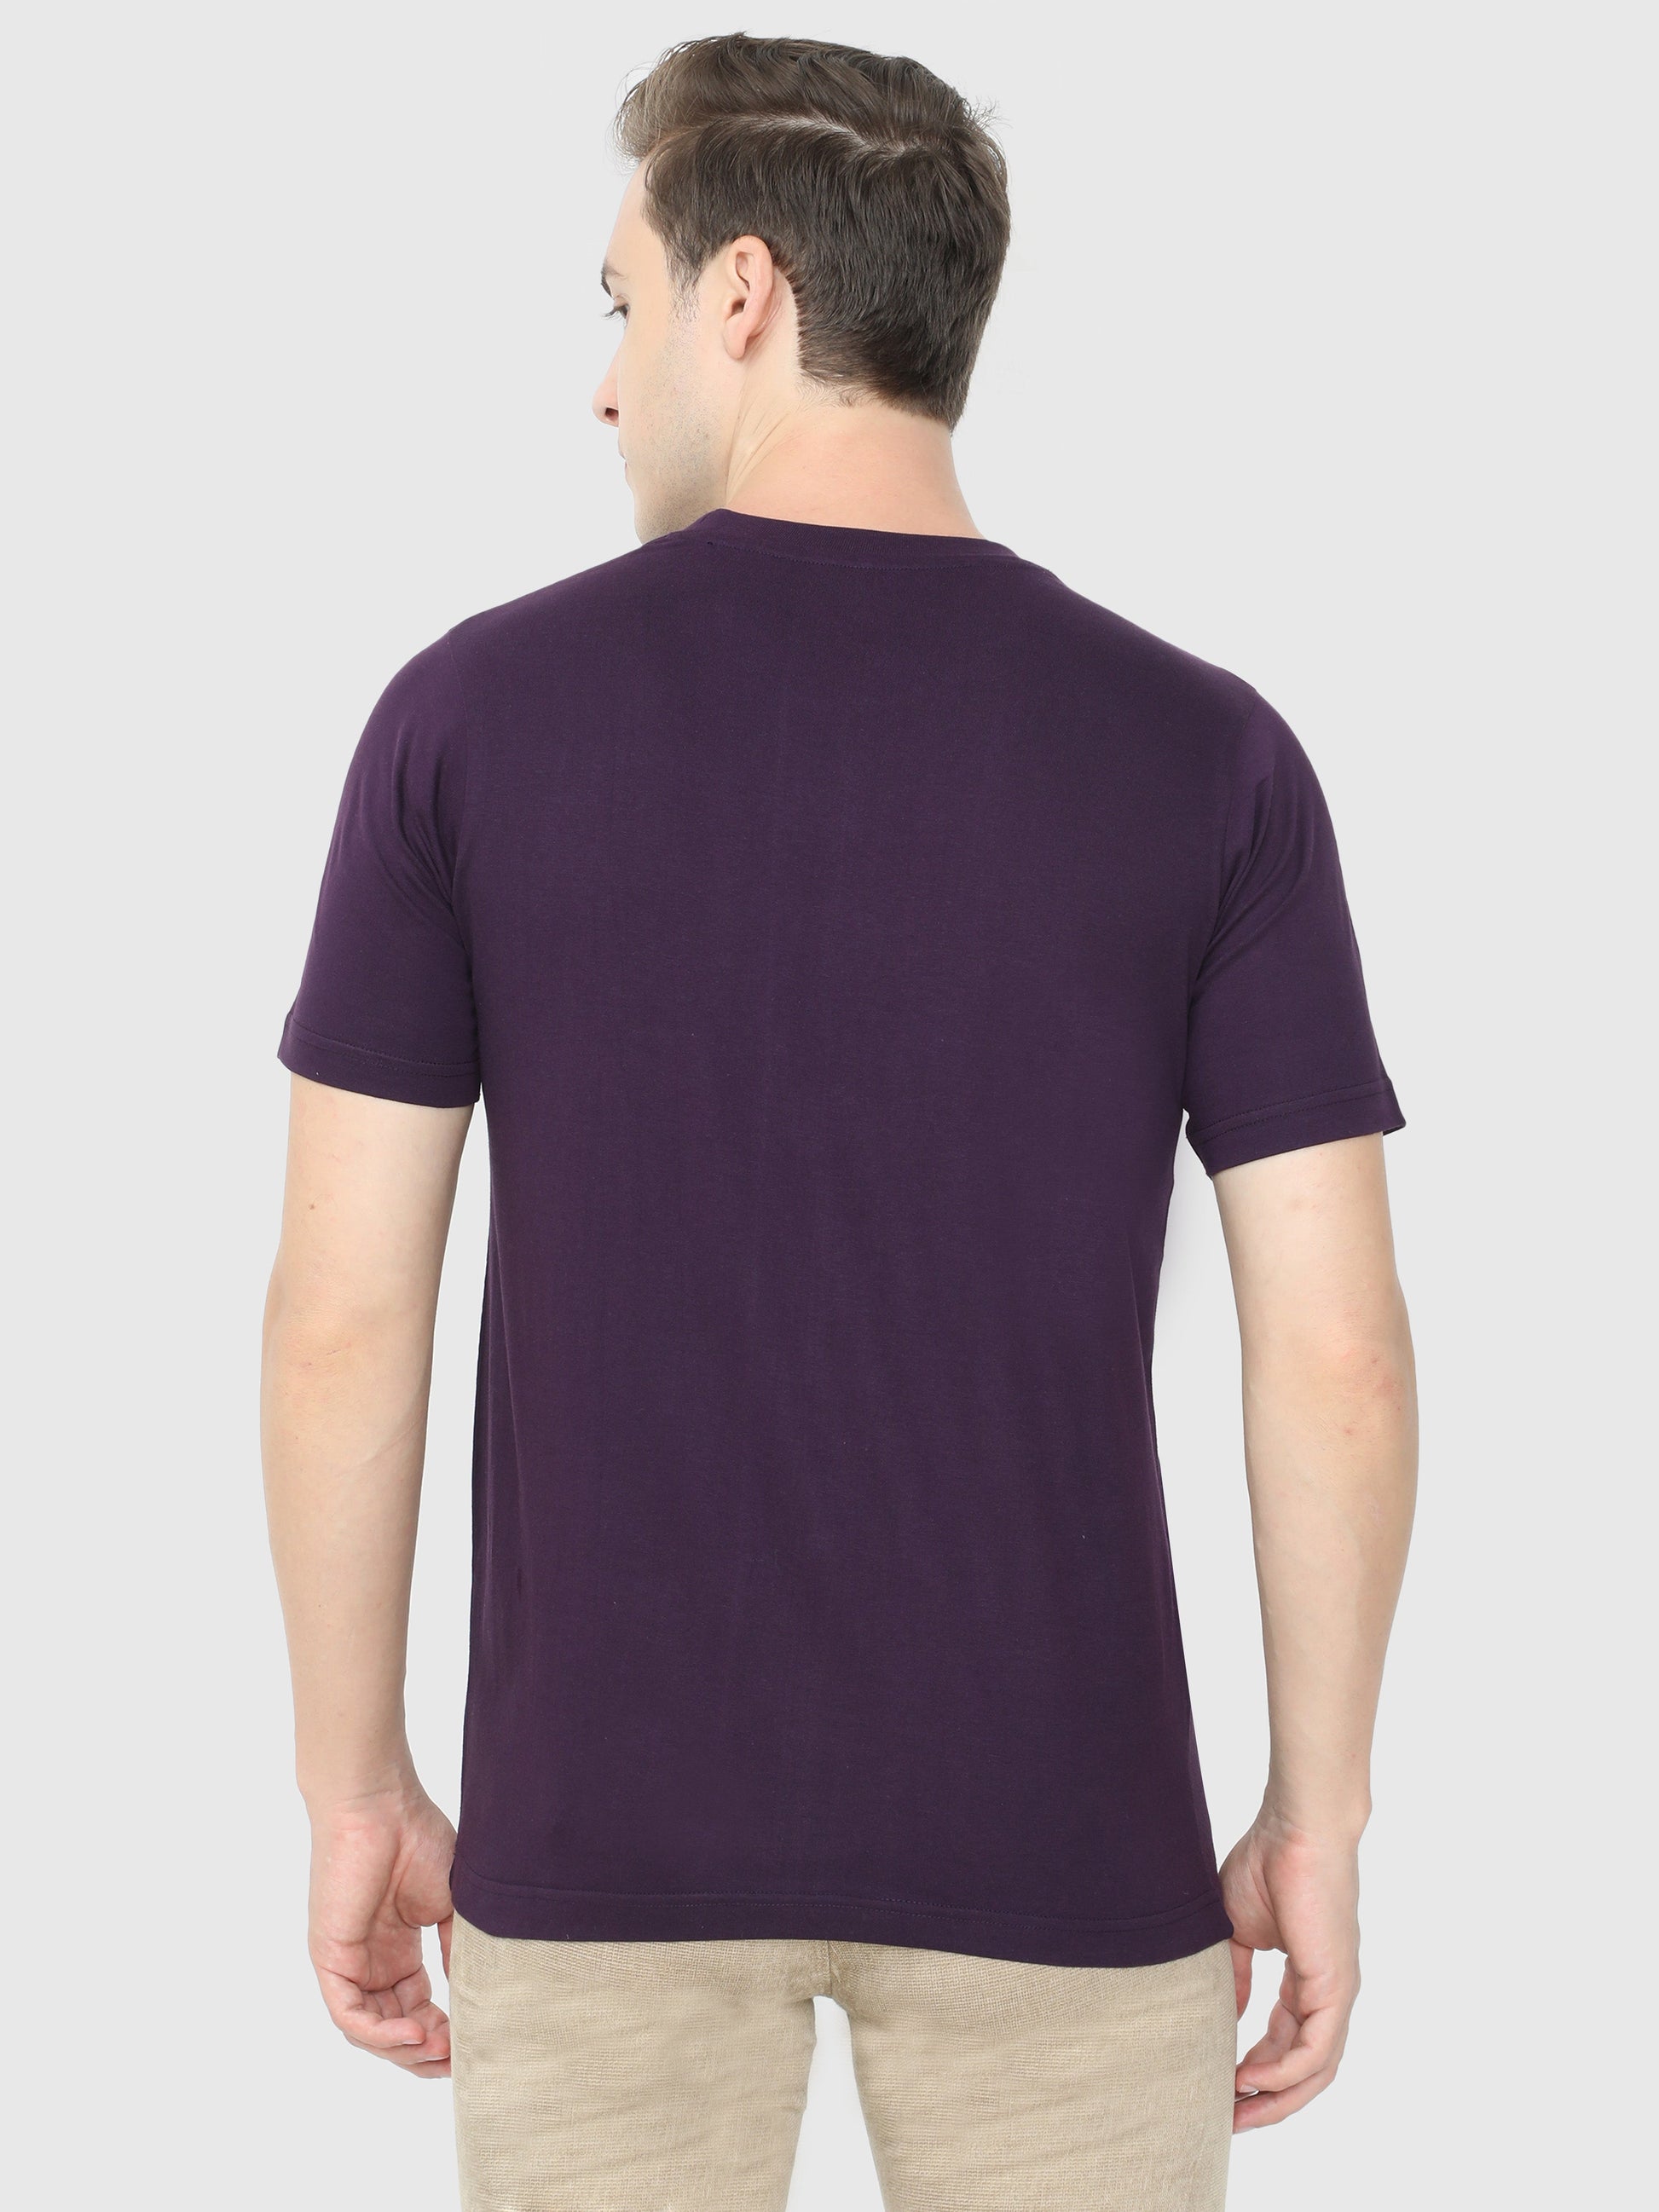 Mens Half Sleeve Printed T Shirt